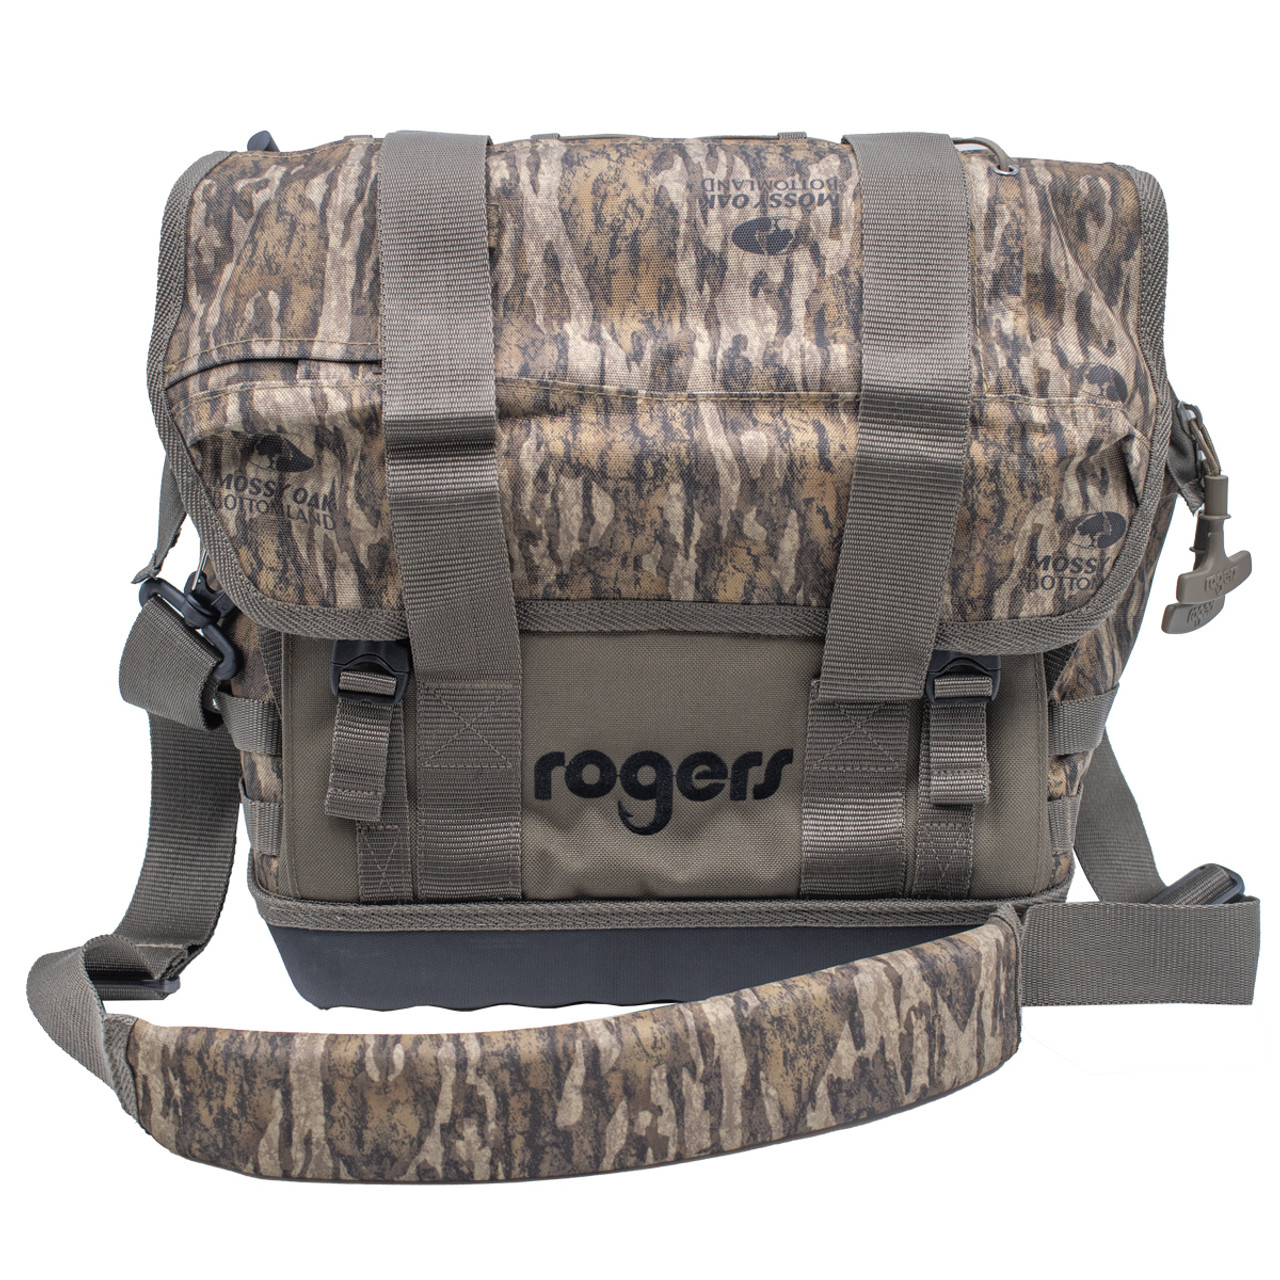 Rogers RG Toughman Expandable Blind Bag, Men's, Size: Large, Realtree Max 7